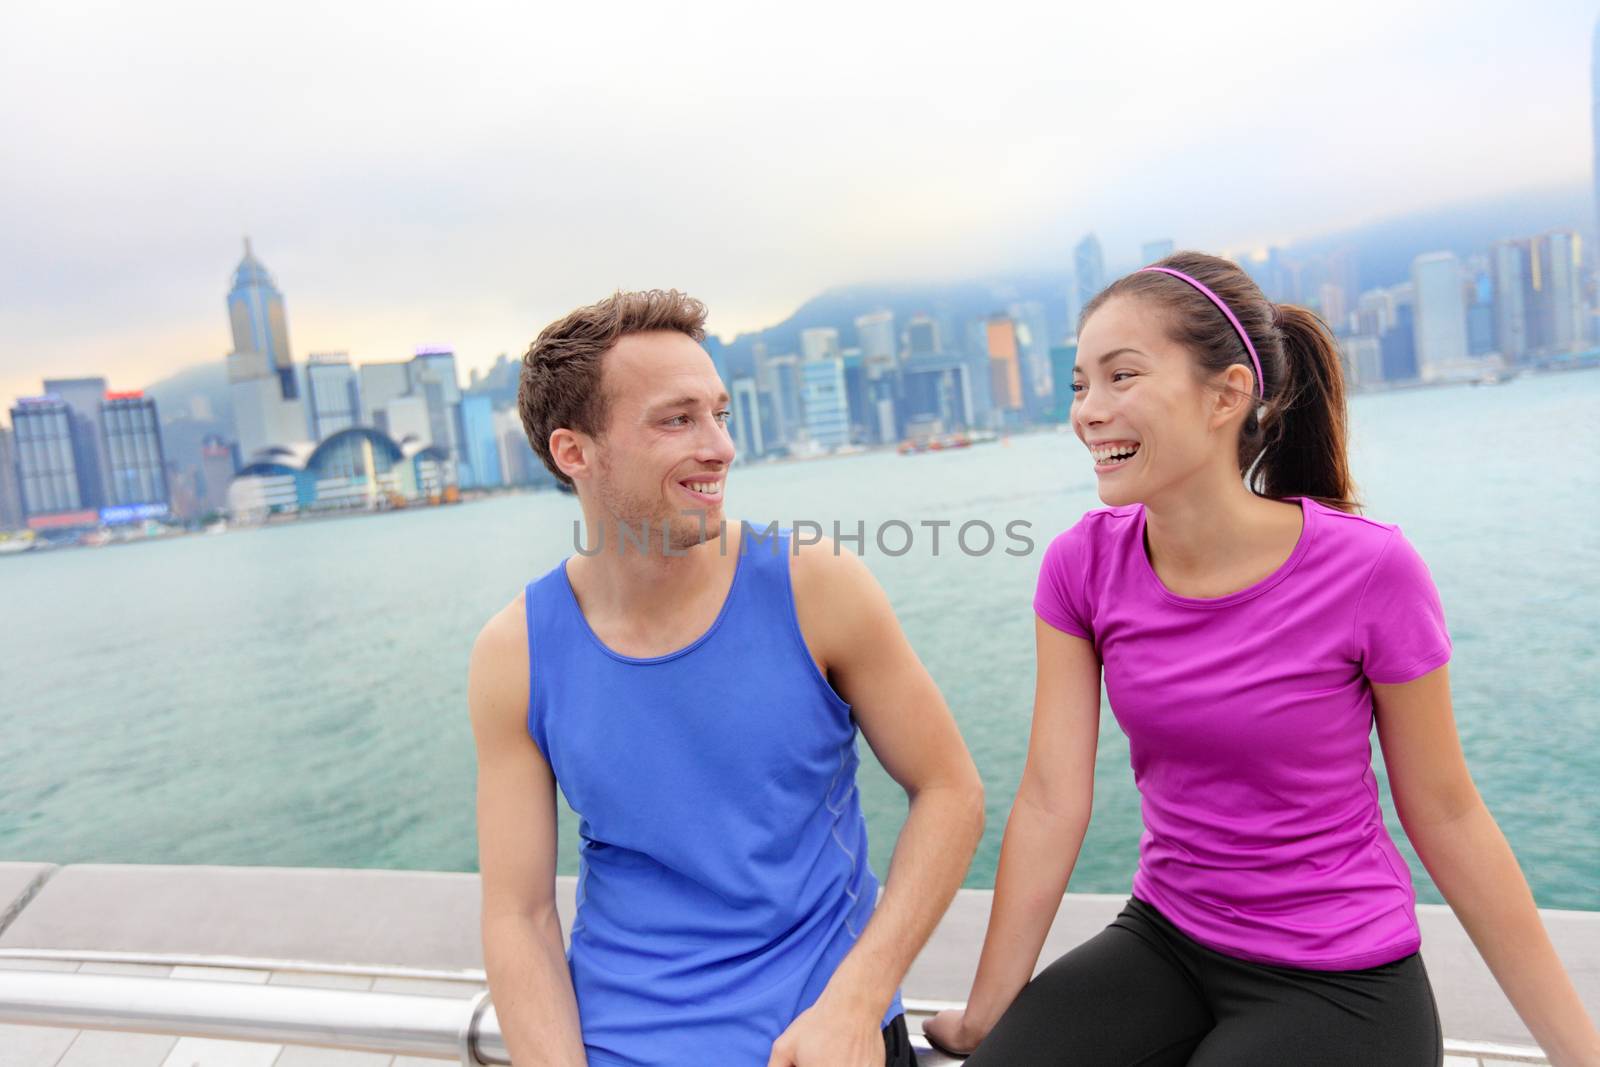 Runners relaxing after workout in Hong Kong city by Maridav